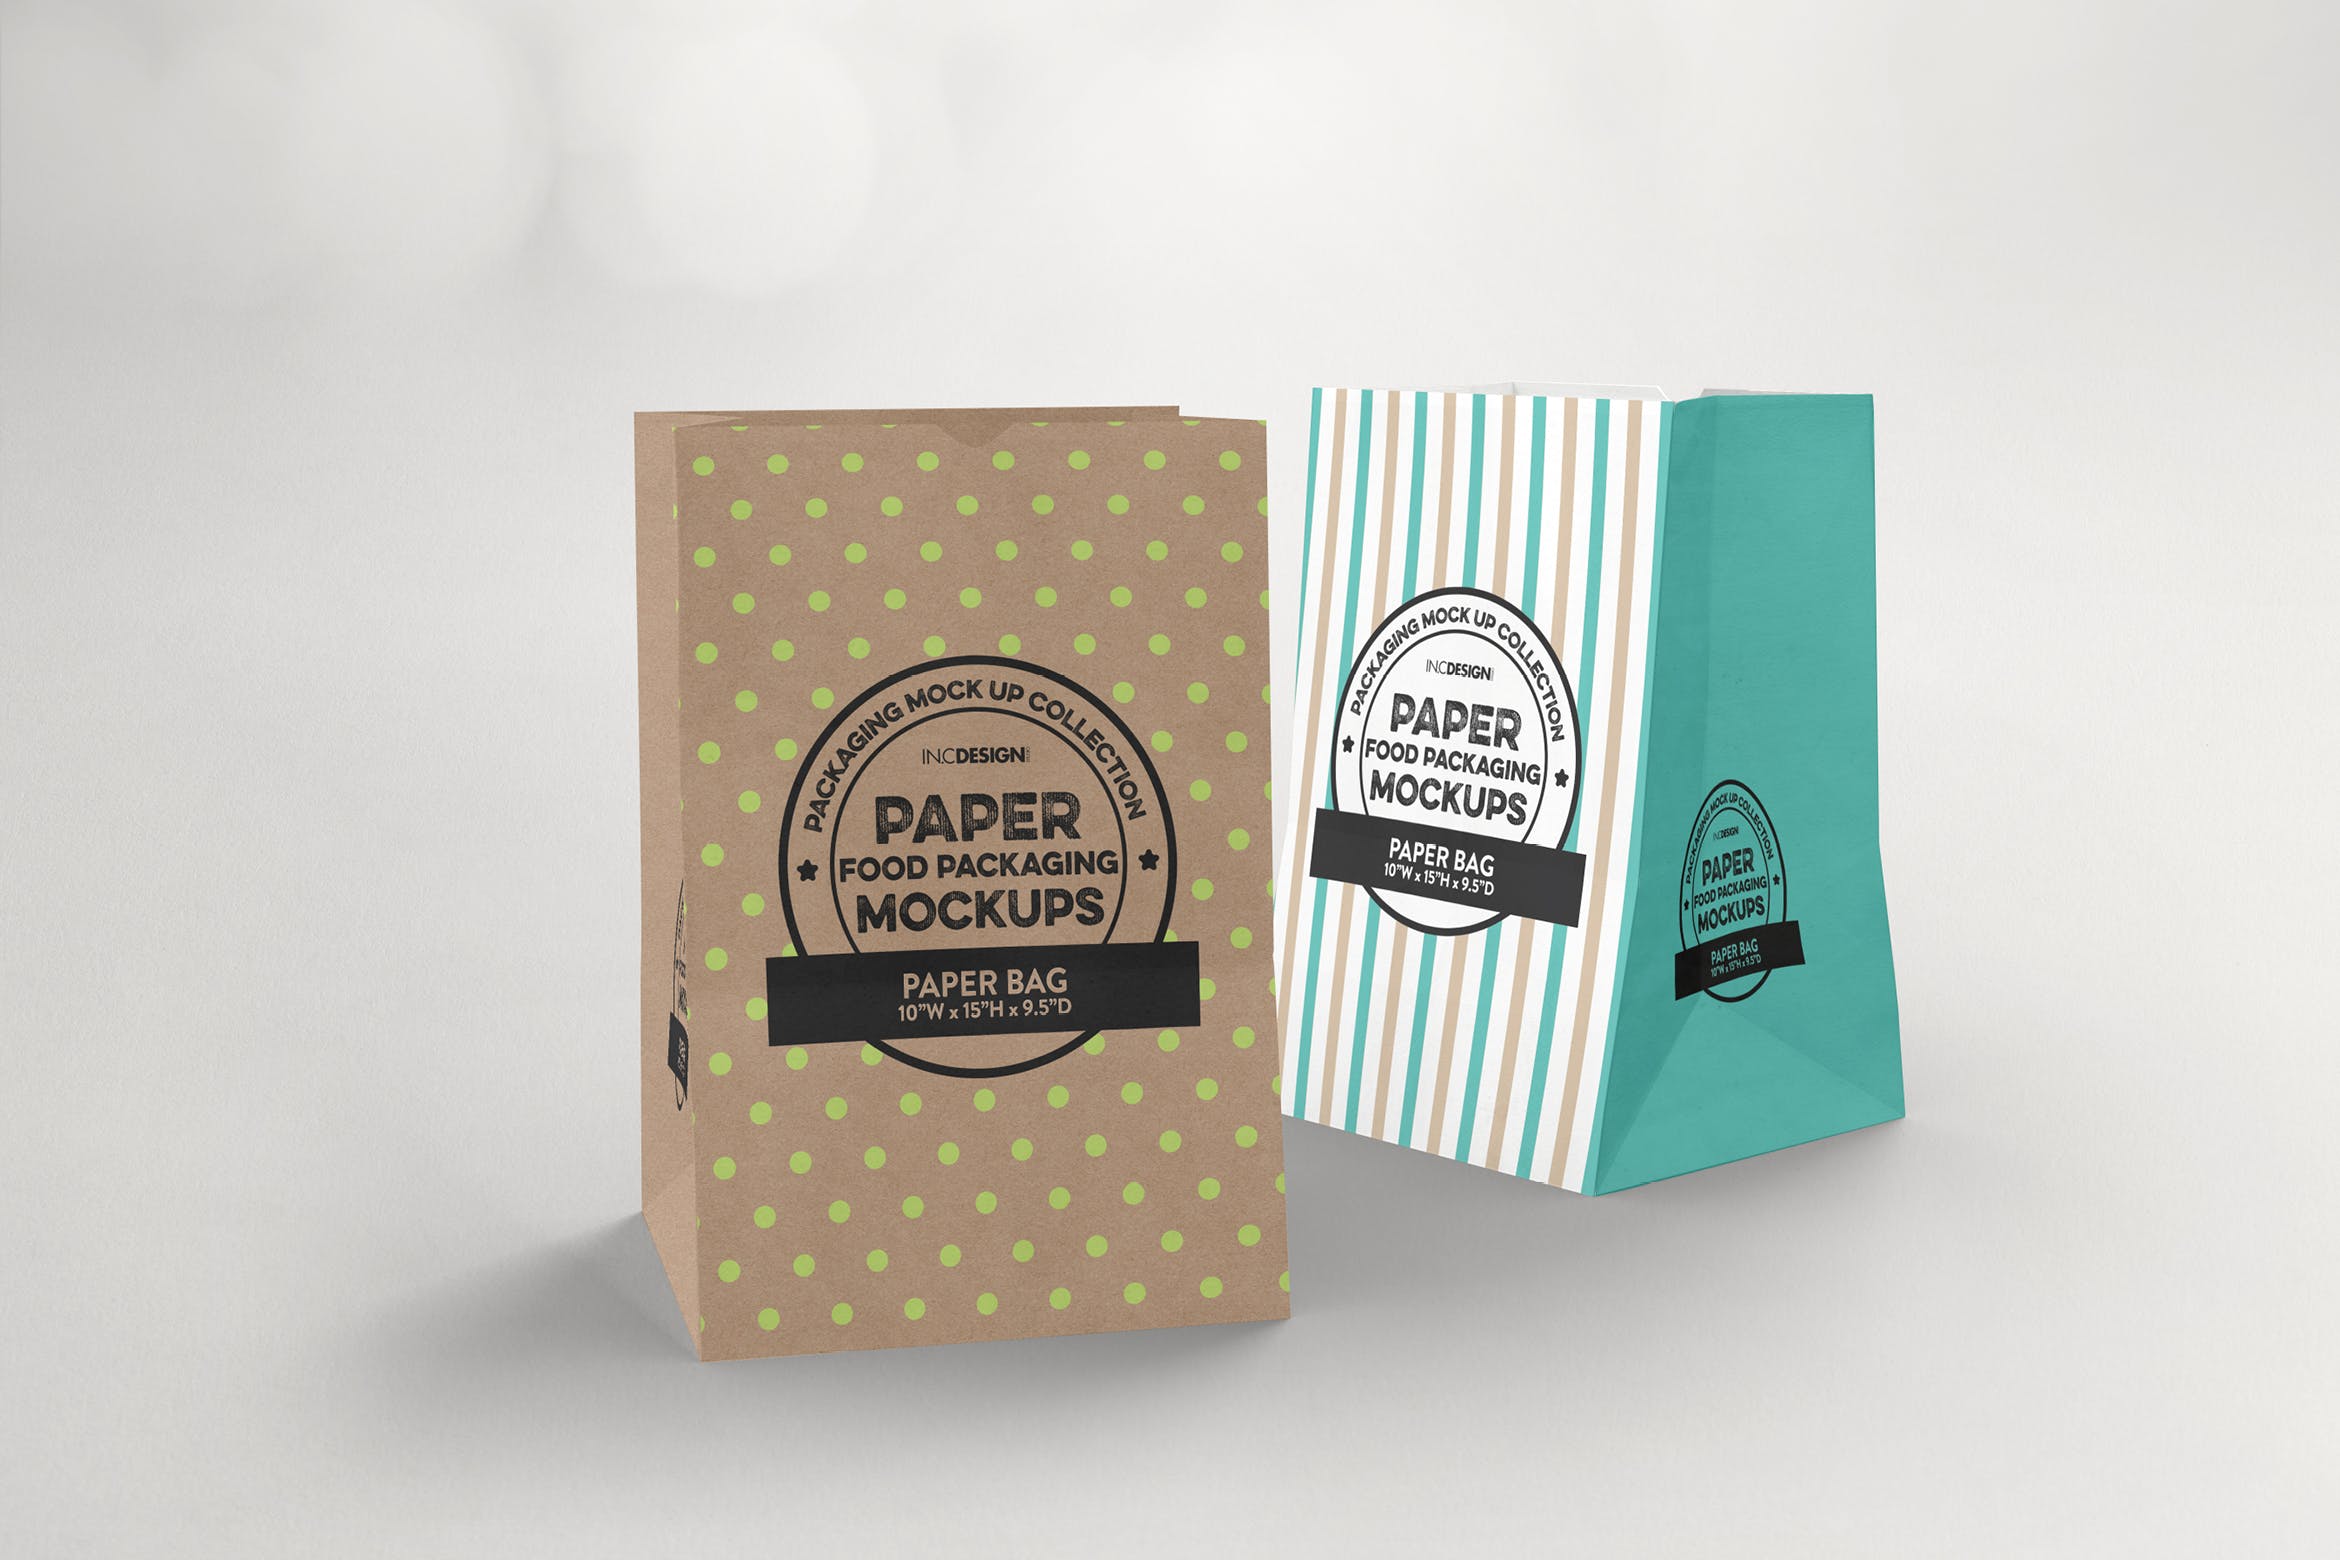 杂货纸袋包装设计效果图素材中国精选 Grocery Paper Bags Packaging Mockup插图